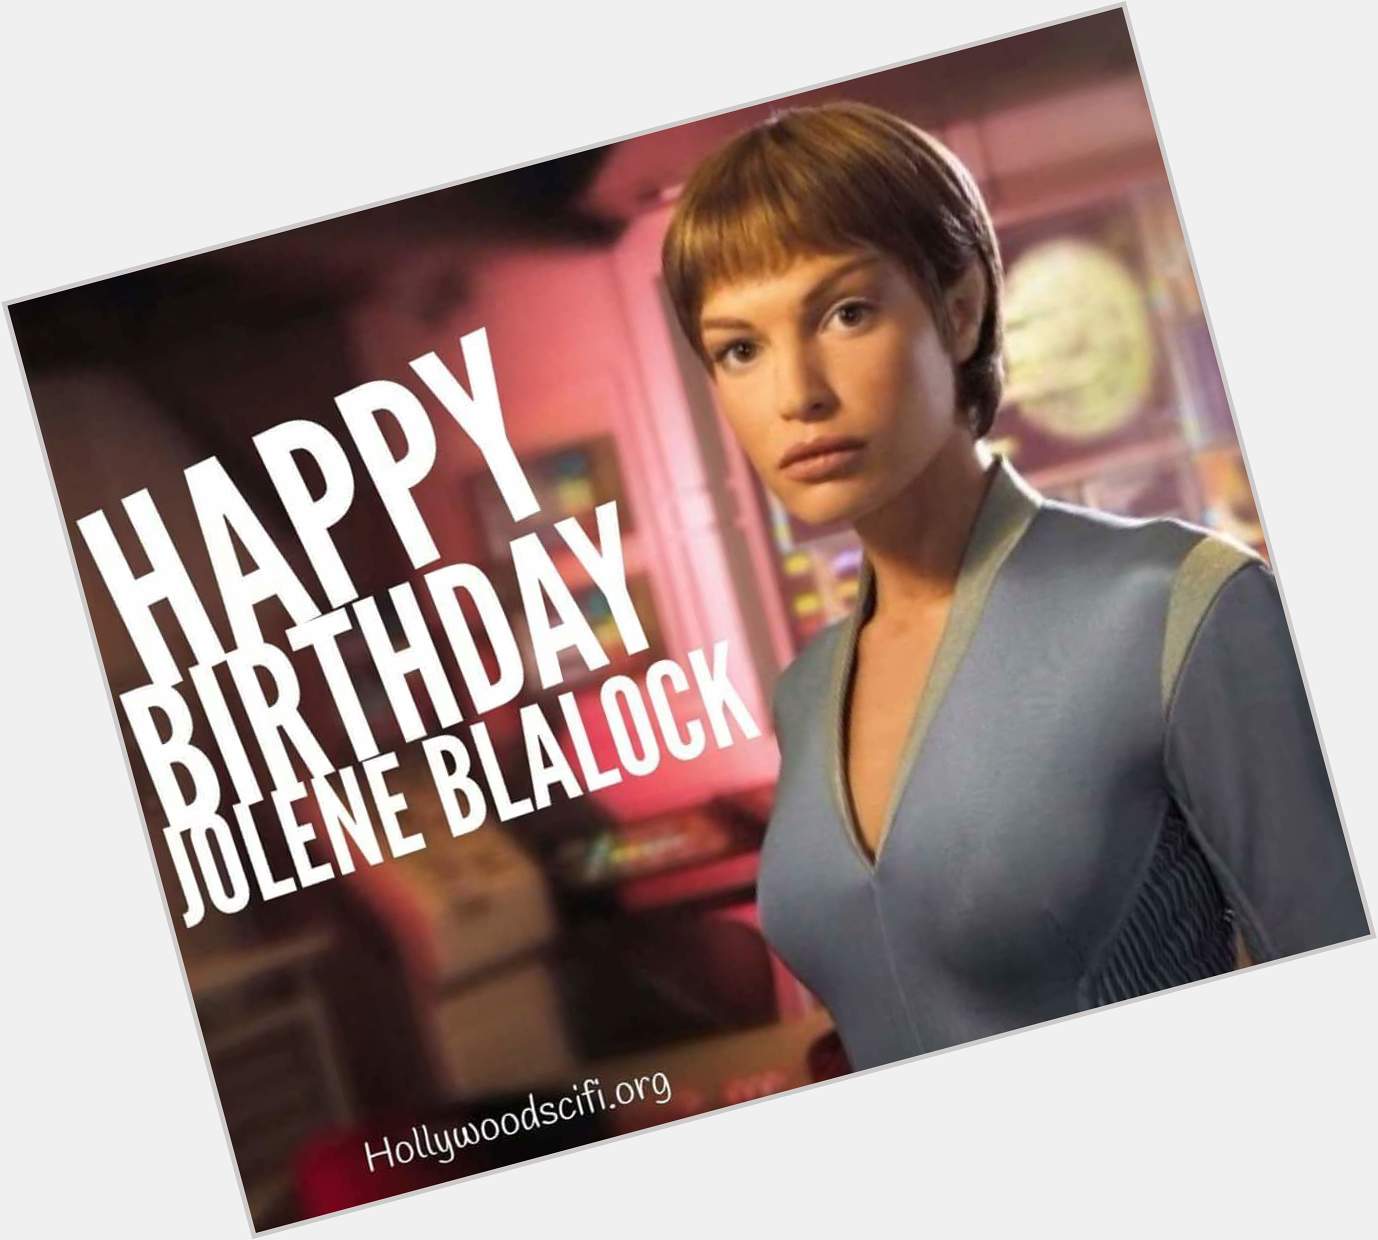 Happy Birthday Jolene Blalock!  